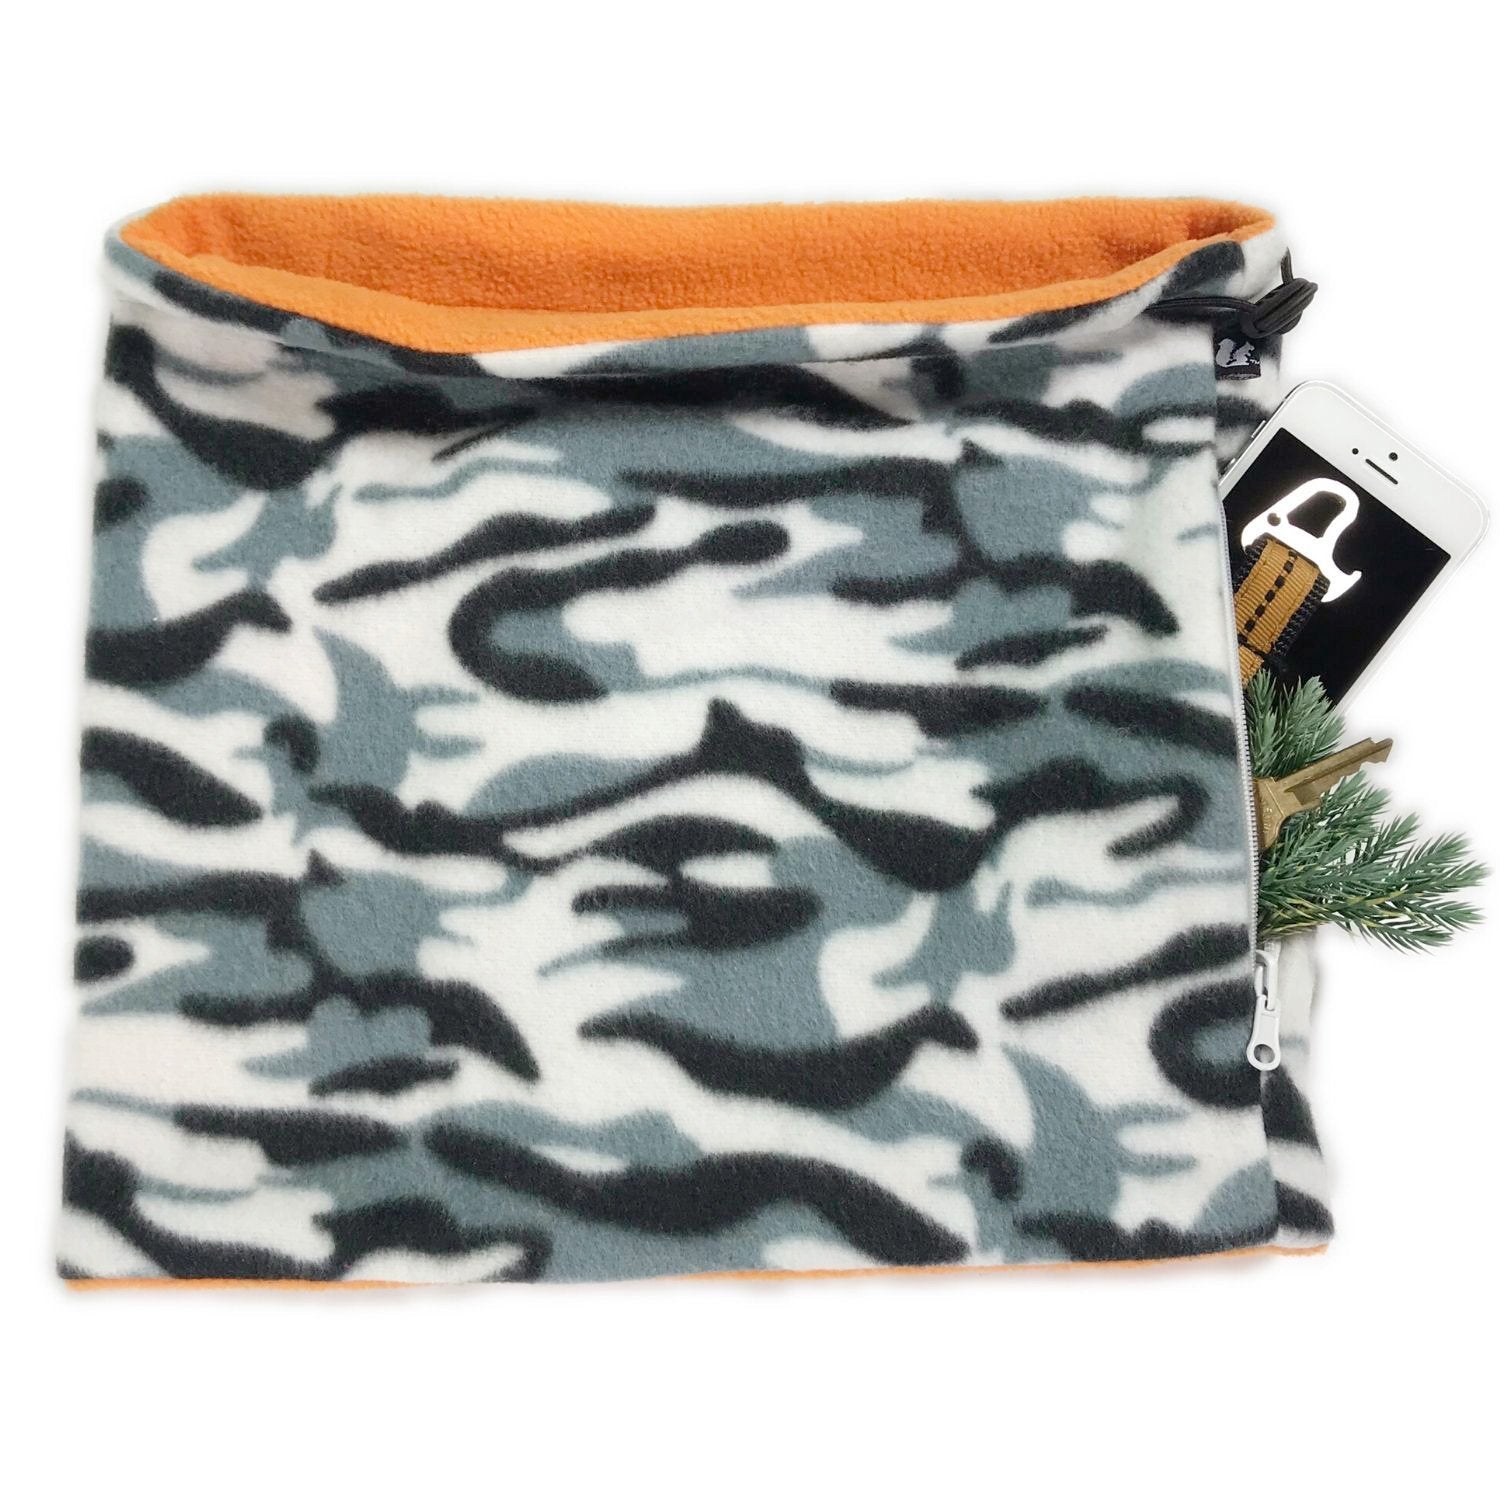 SHOLDIT Convertible Neck Gaiter with Pocket Camouflage Orange Fleece